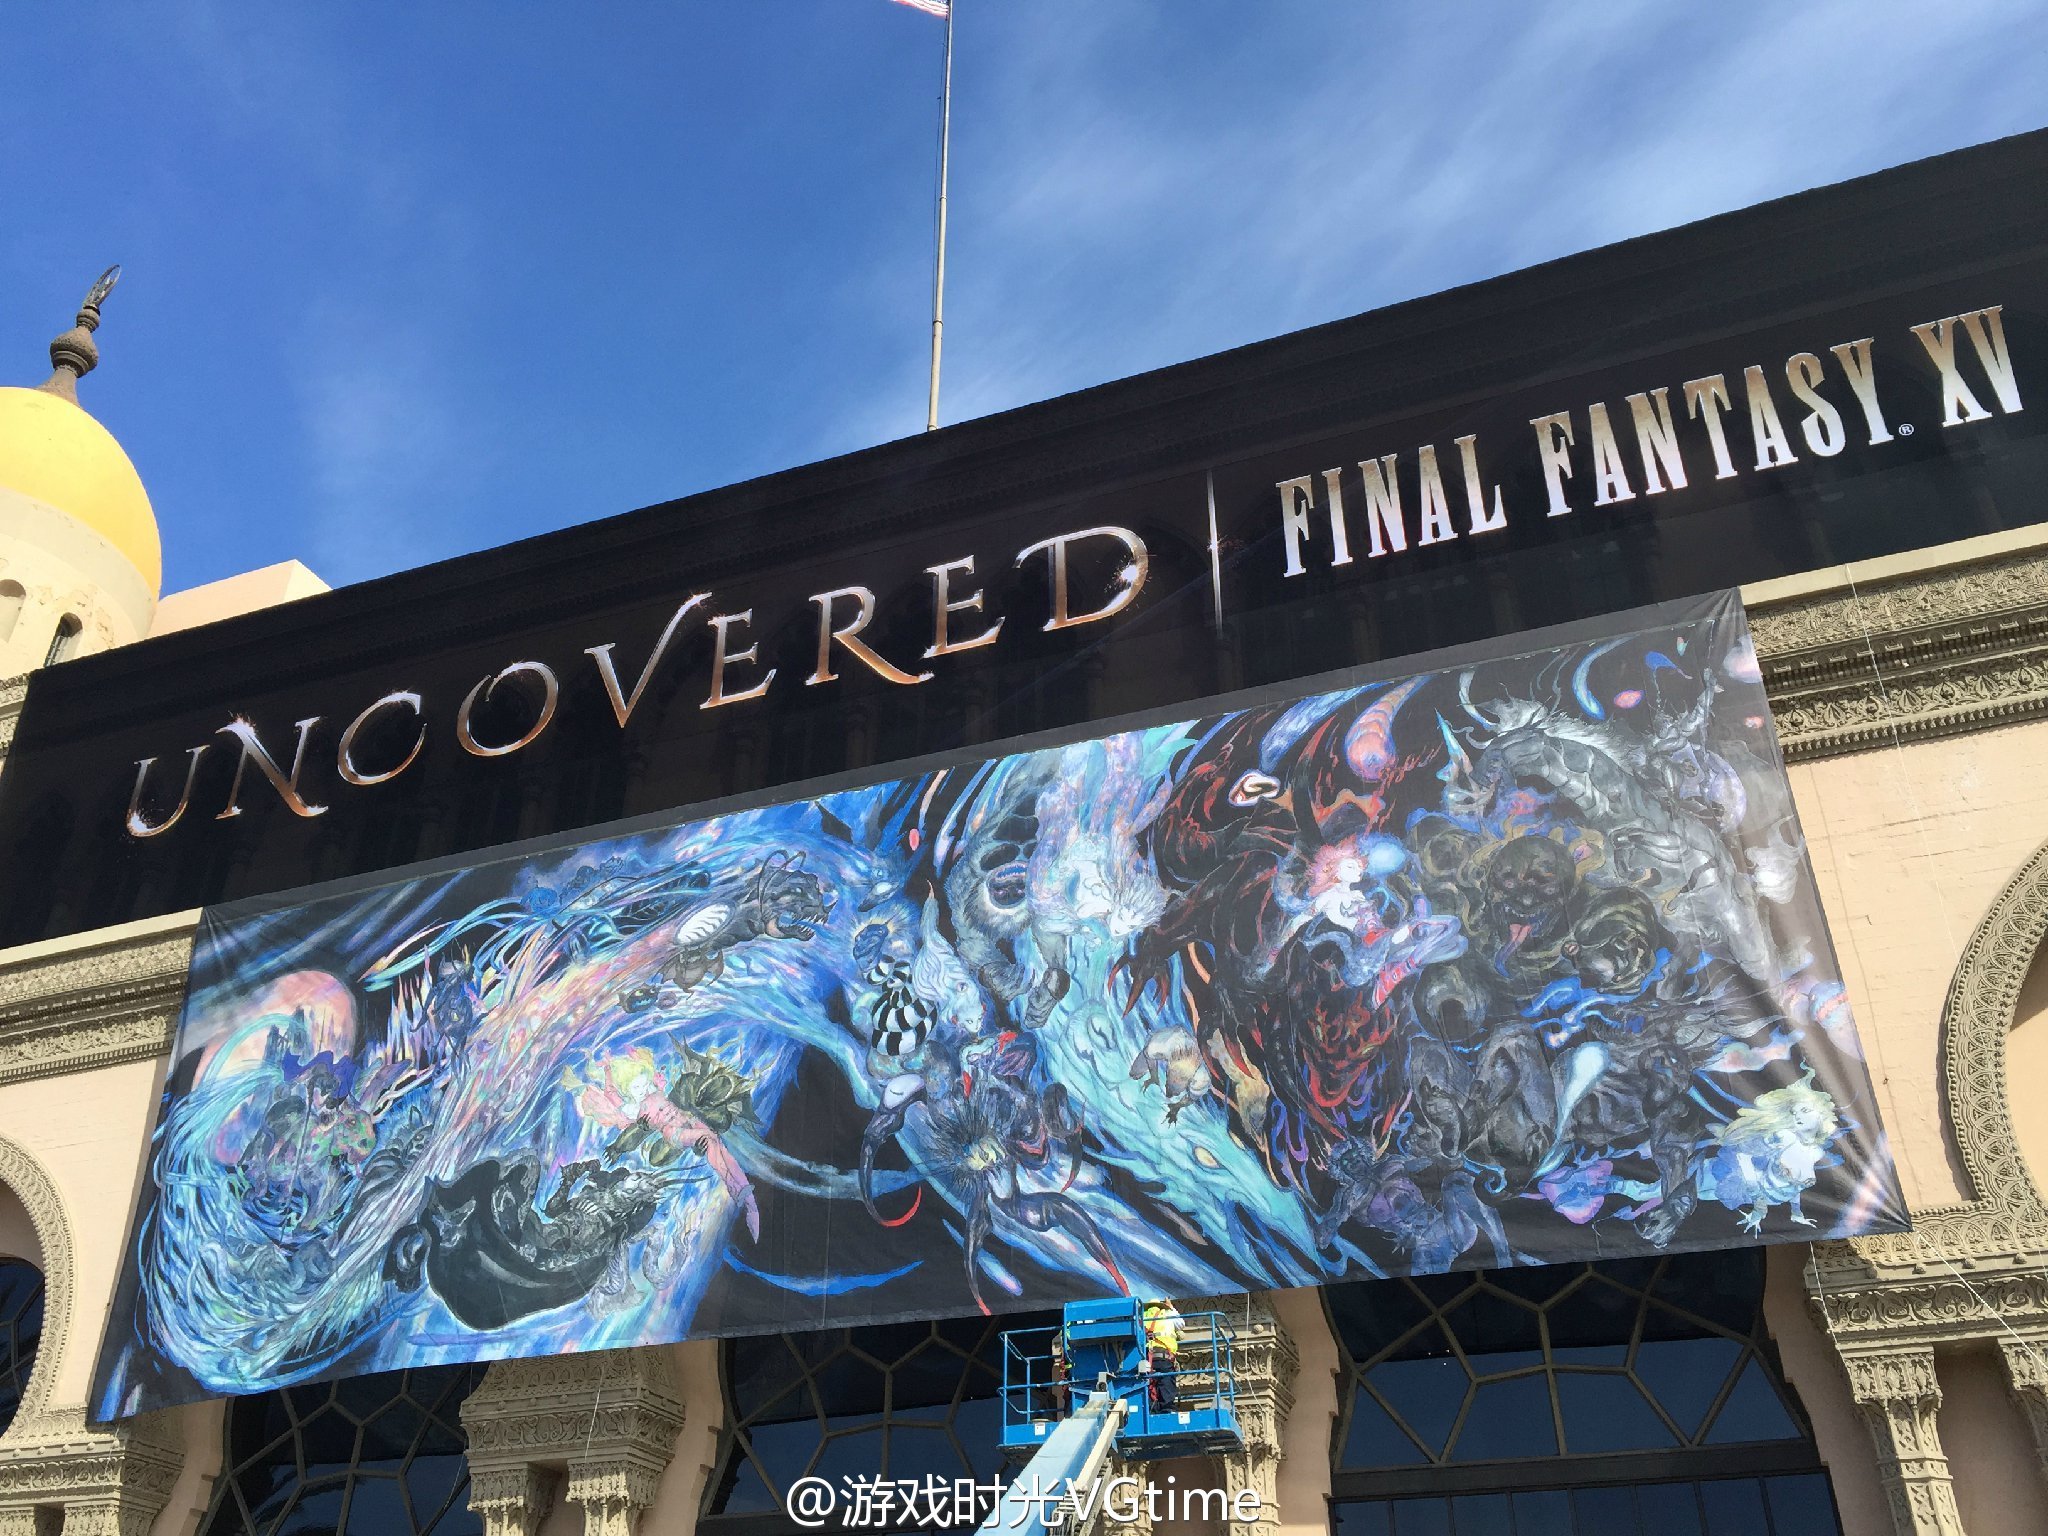 Yoshitaka Amano Drawn Final Fantasy Xv Artwork Decorates Los Angeles Shrine Auditorium Gematsu